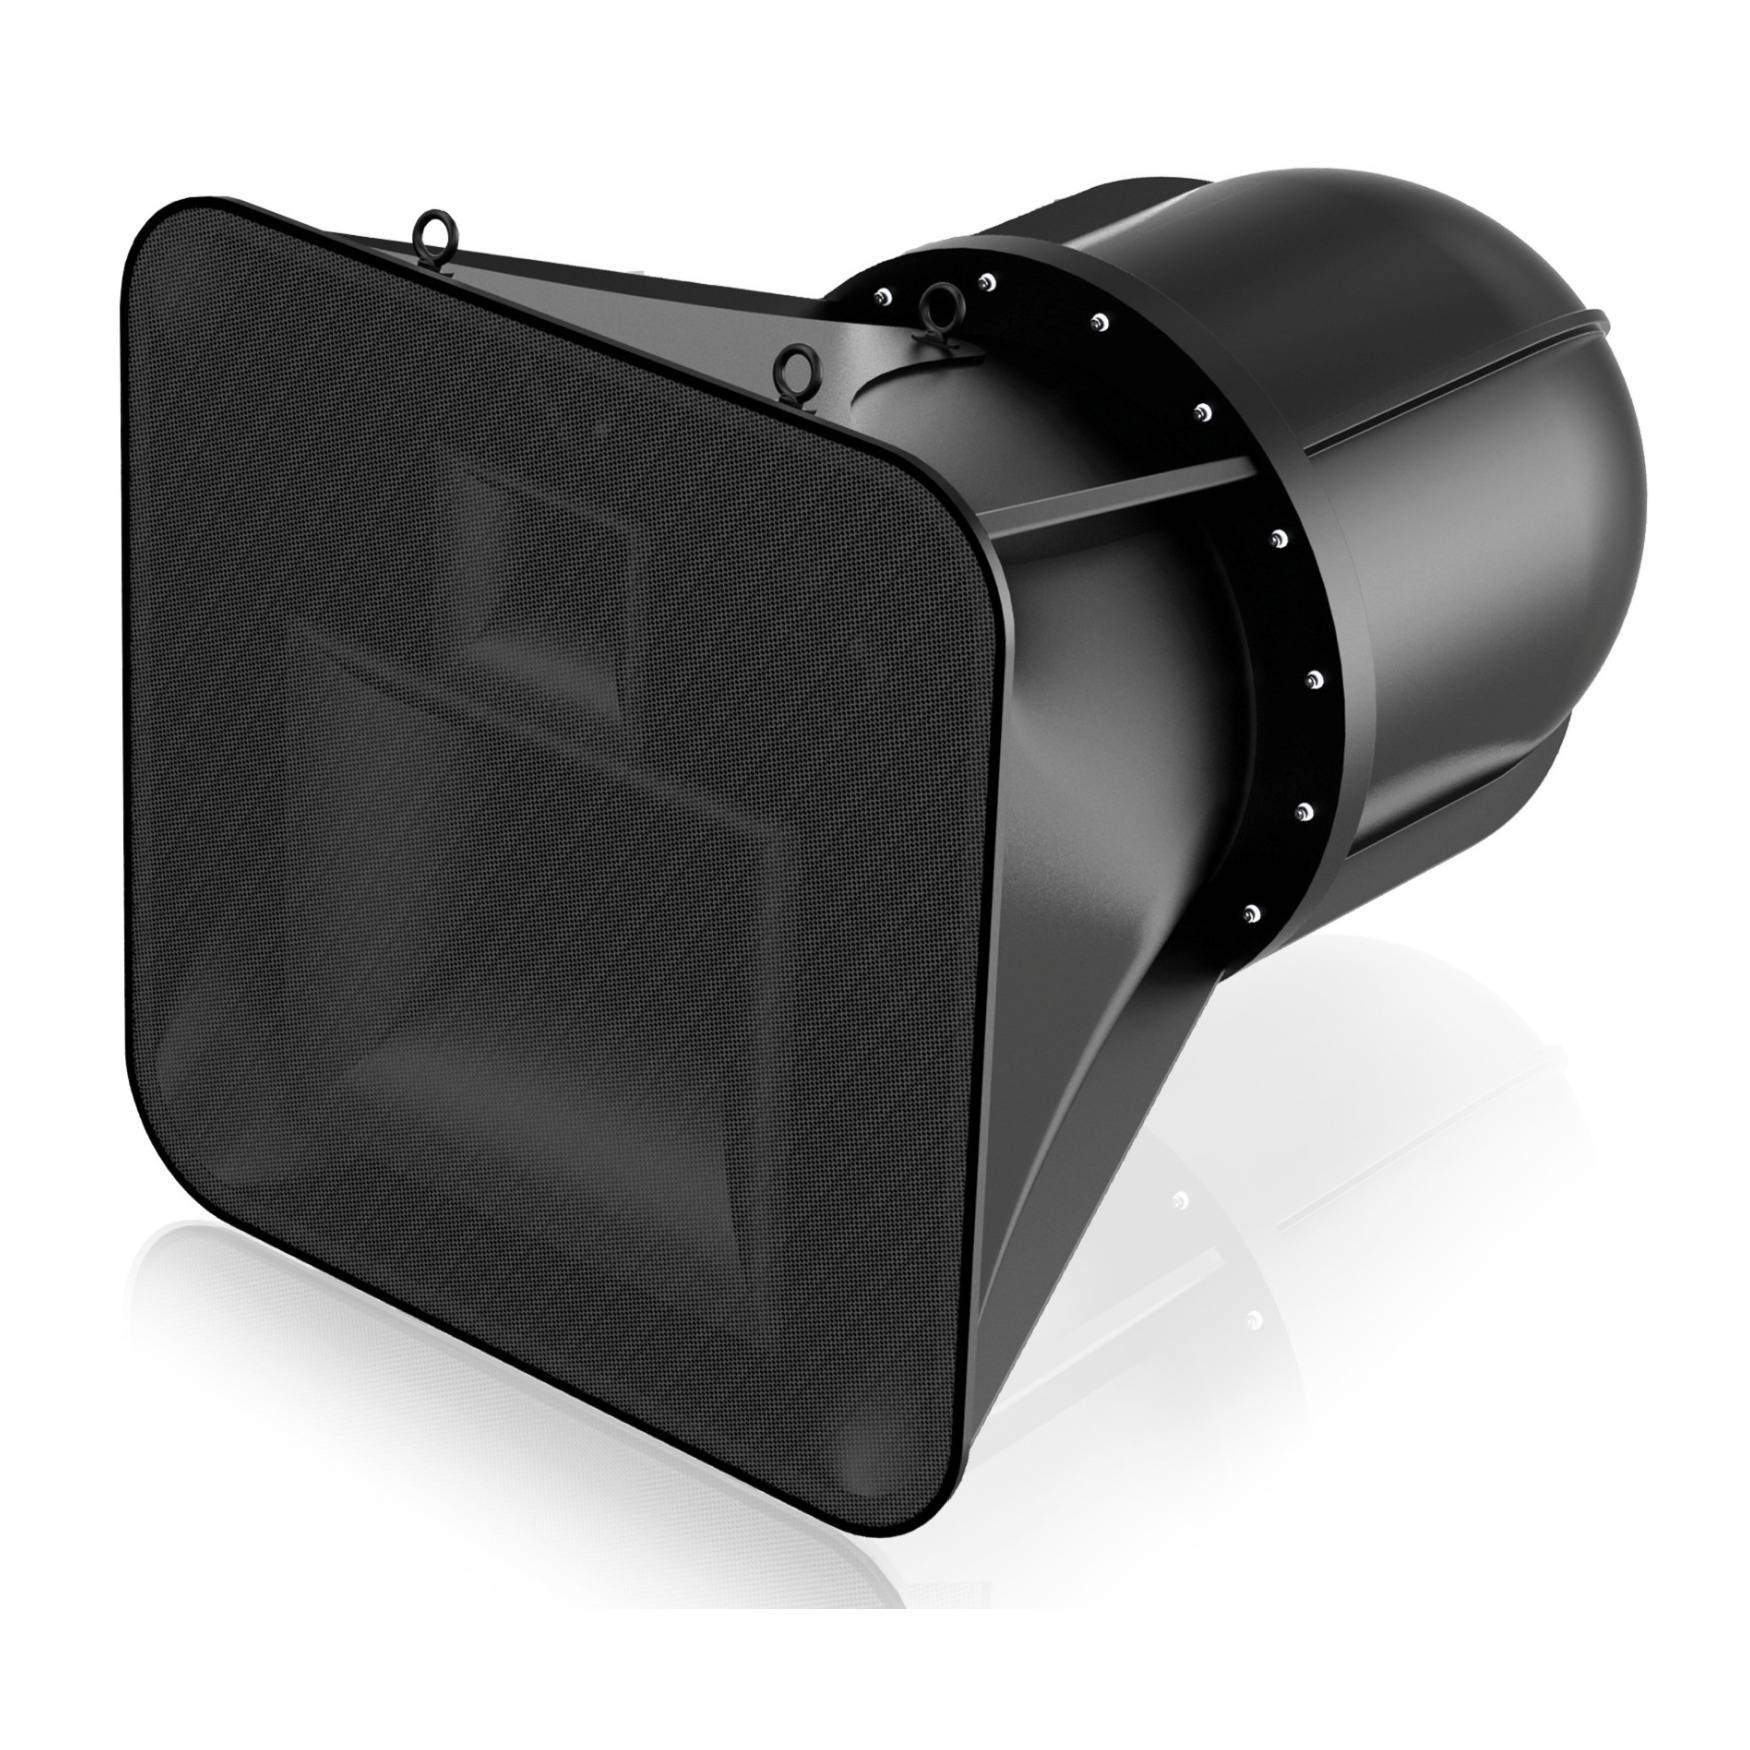 AtlasIED AH94-212 3-Way Stadium Horn Speaker with 90x40-Degree Coverage Pattern (Black)